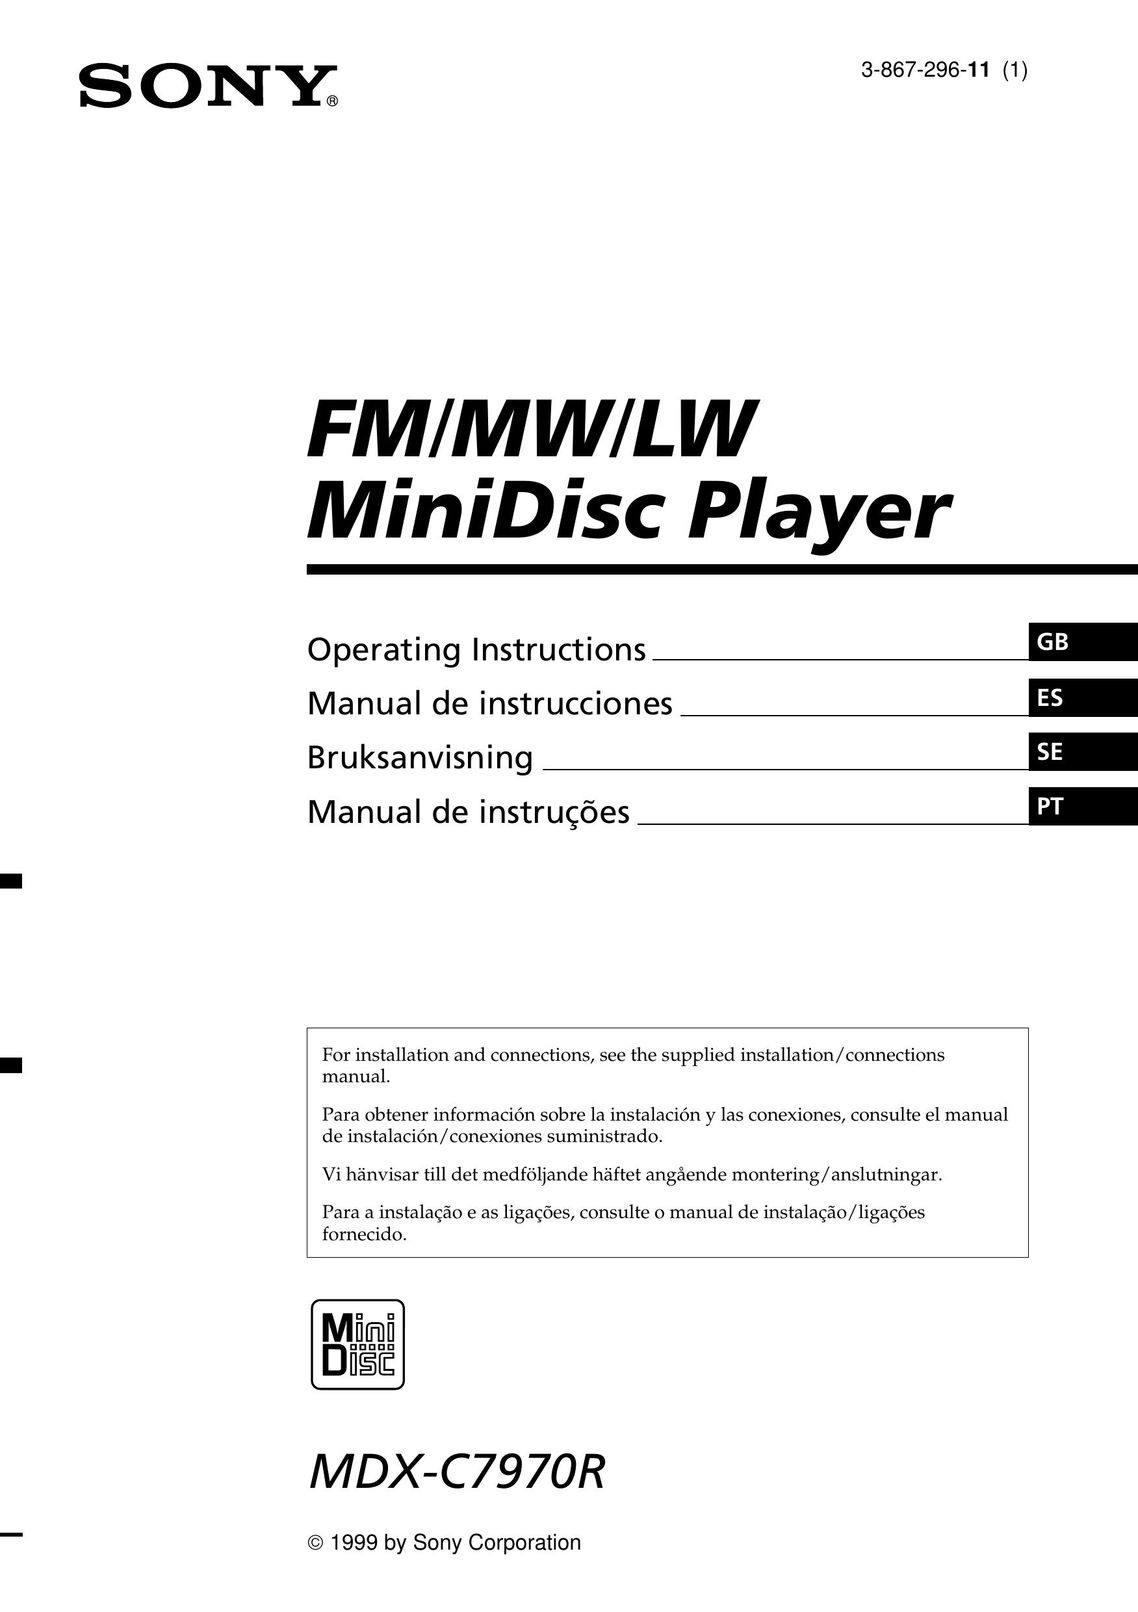 Sony MDX-C7970R MiniDisc Player User Manual